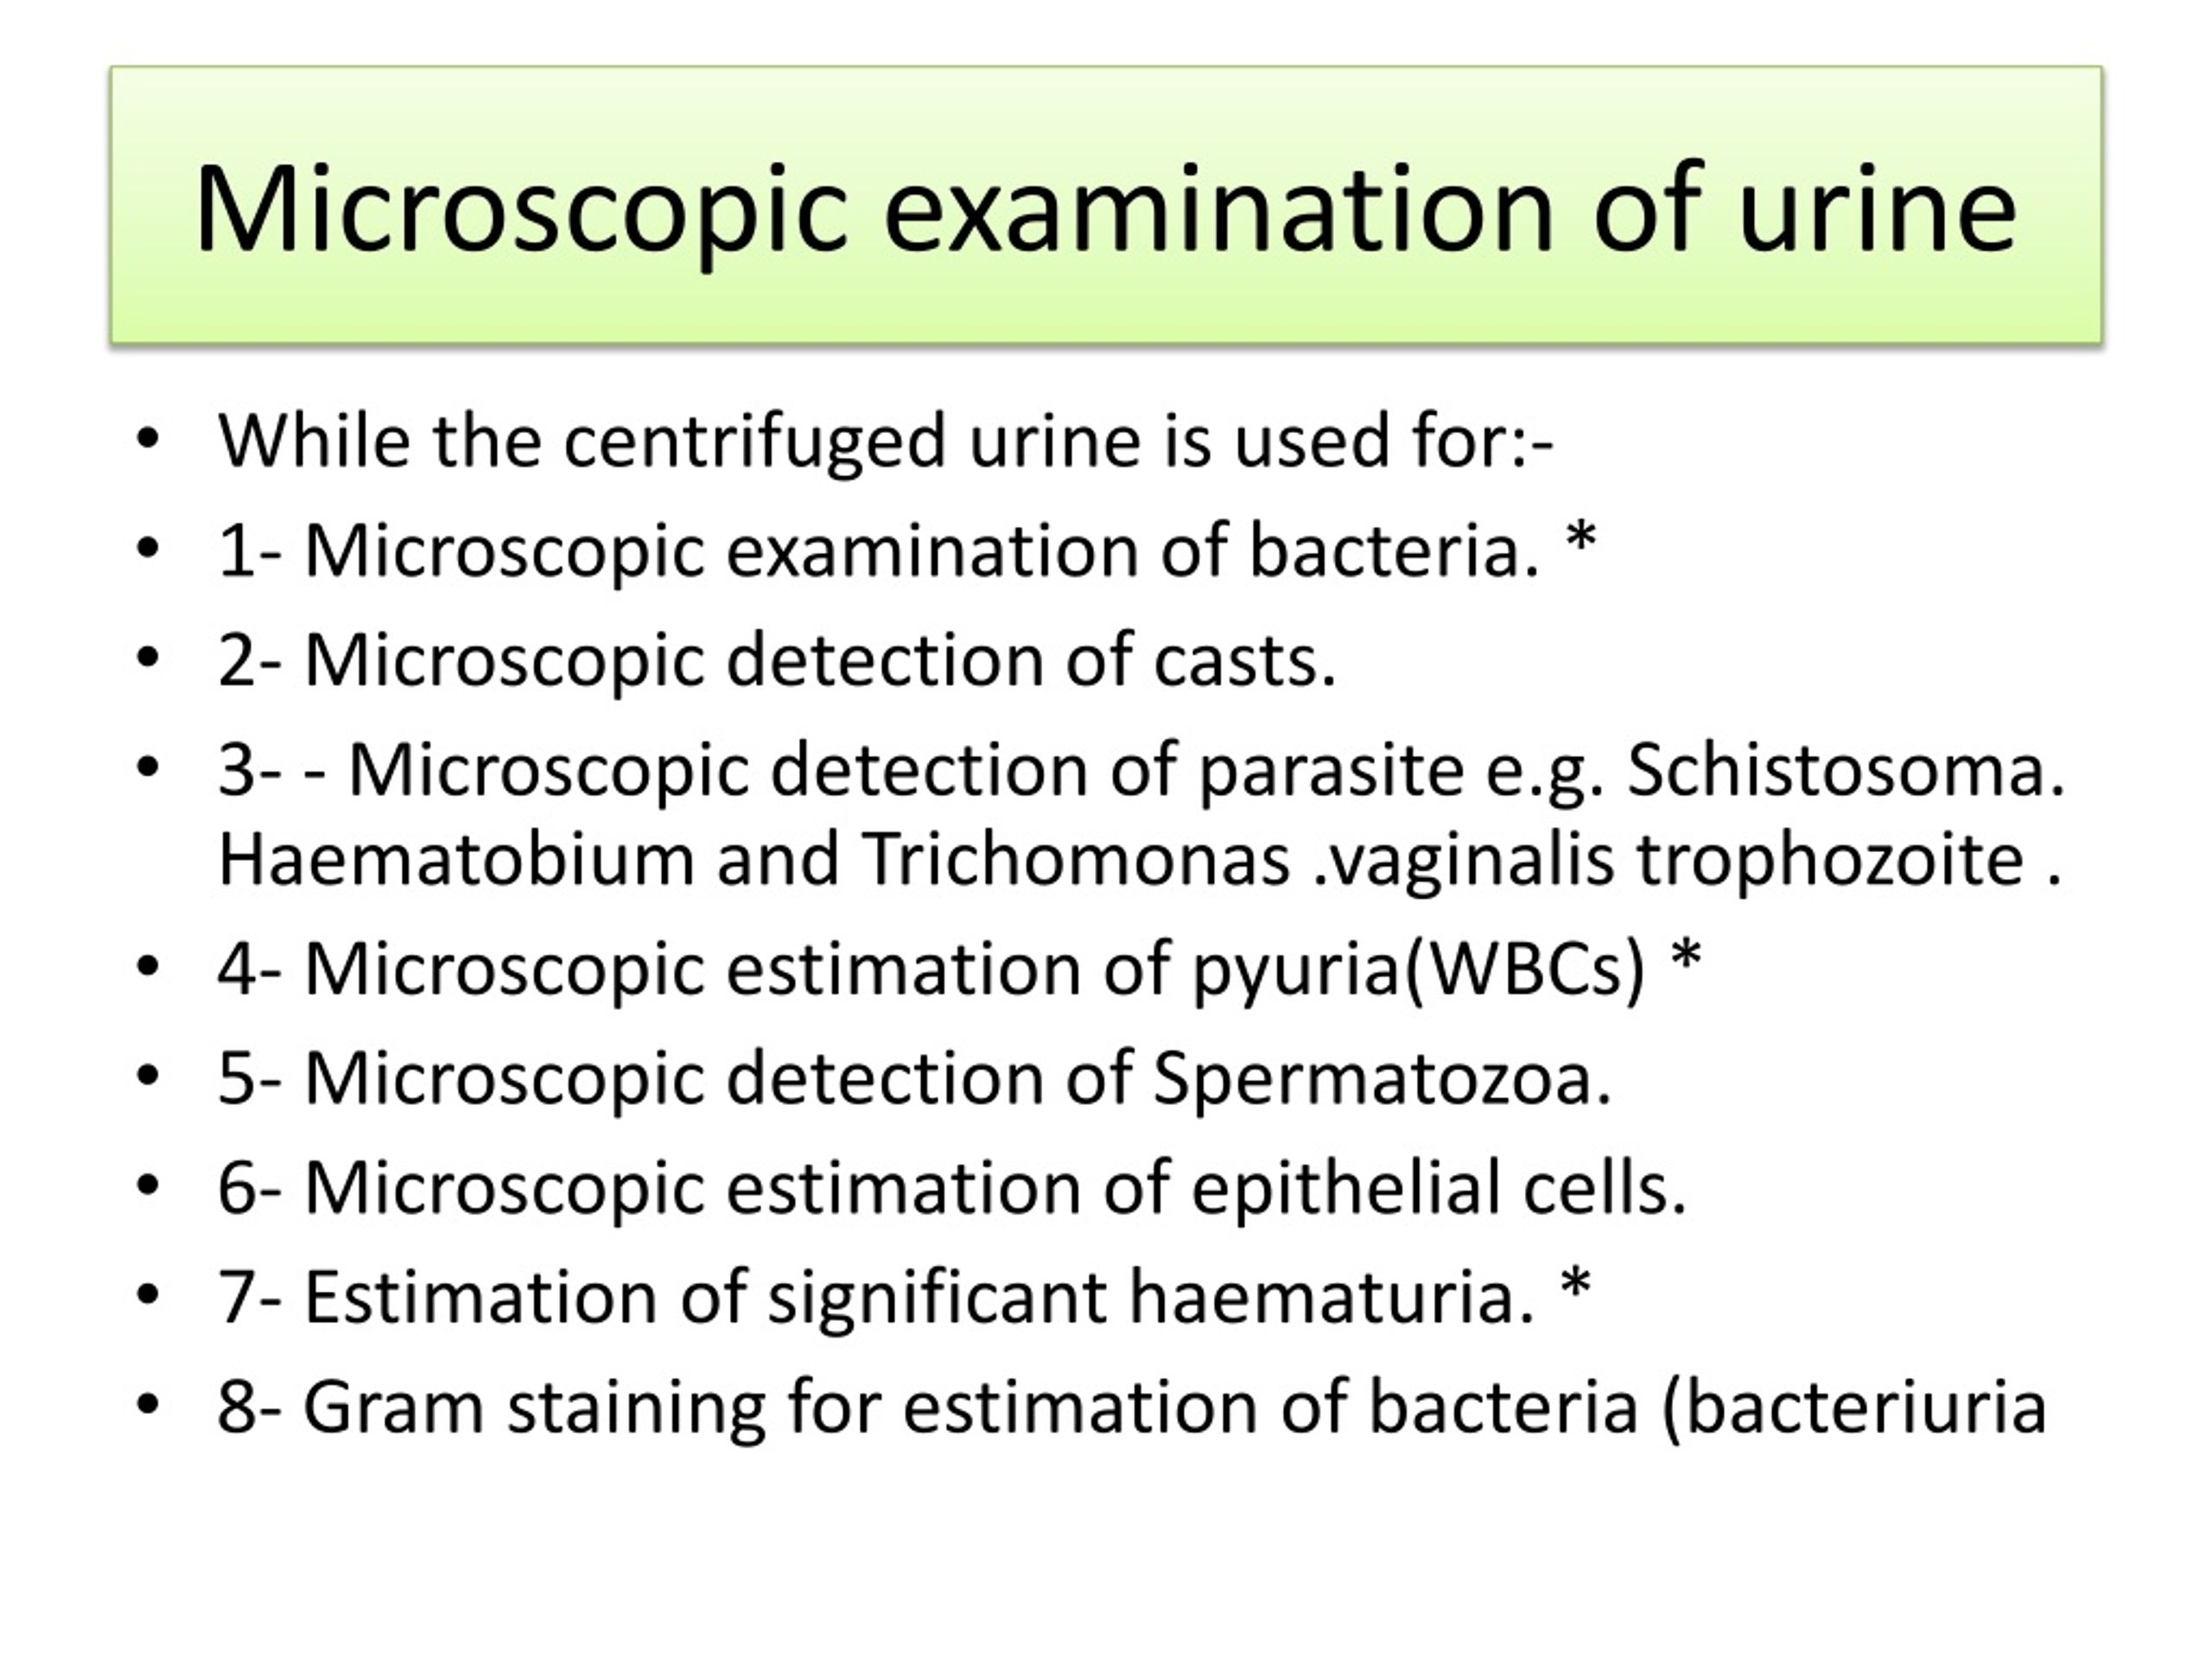 Ppt General Urine Examination Microscopic Examination Of Urine Powerpoint Presentation Id 6506